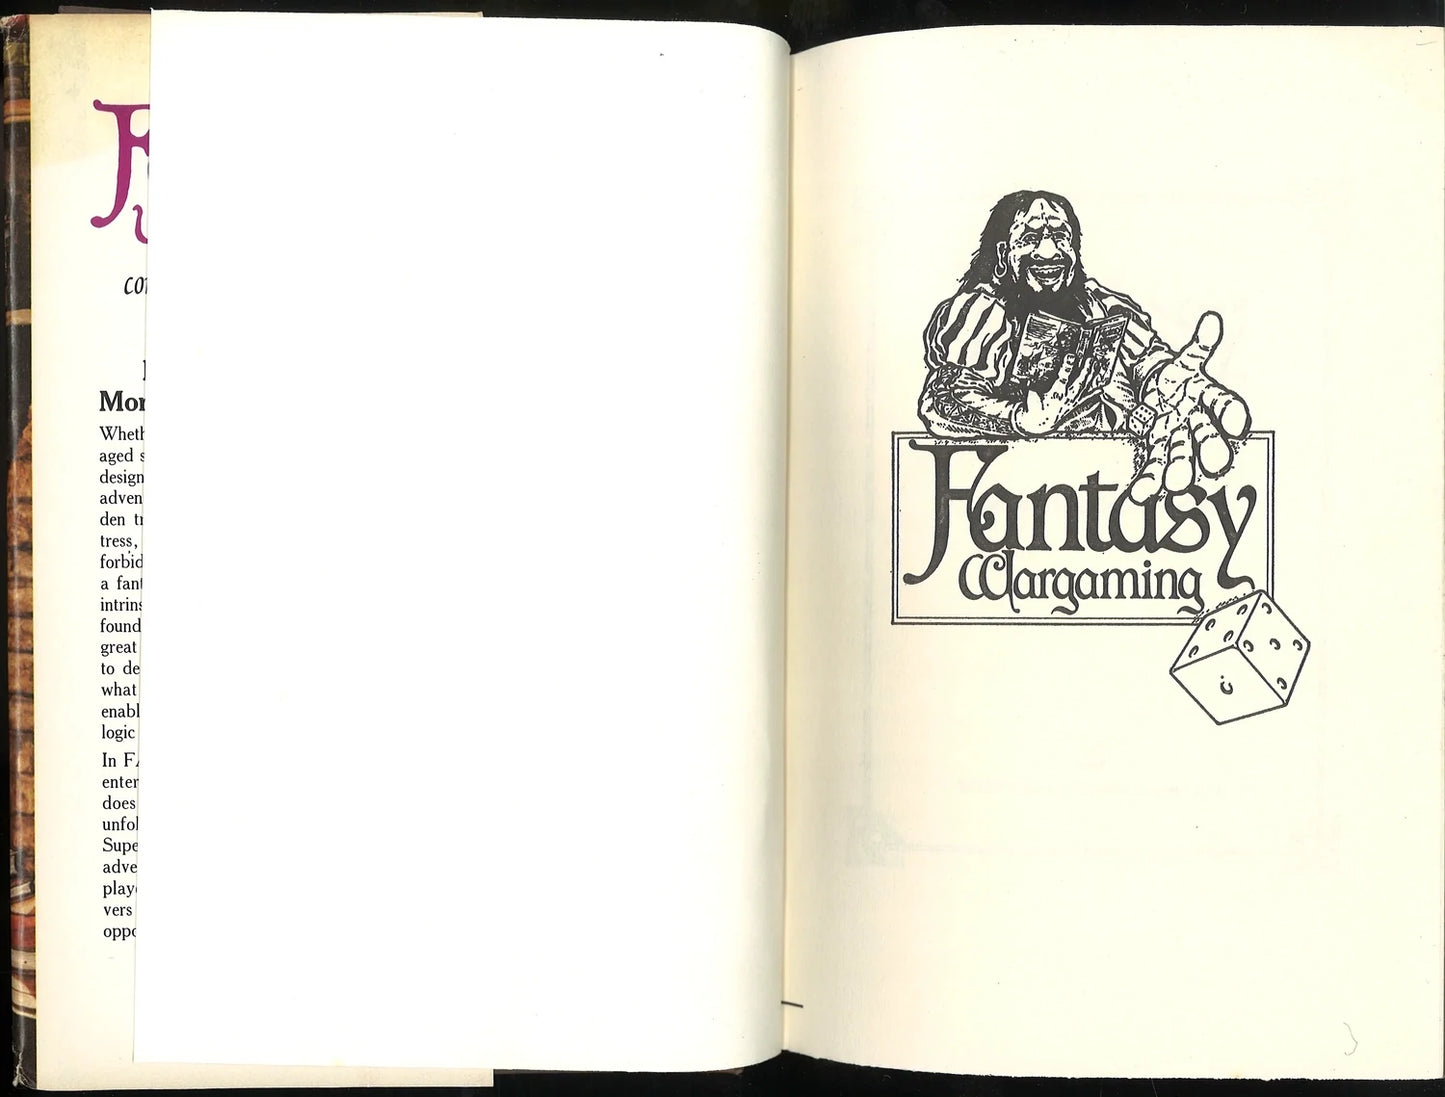 Fantasy Wargaming  (D&D) ed. Bruce Galloway